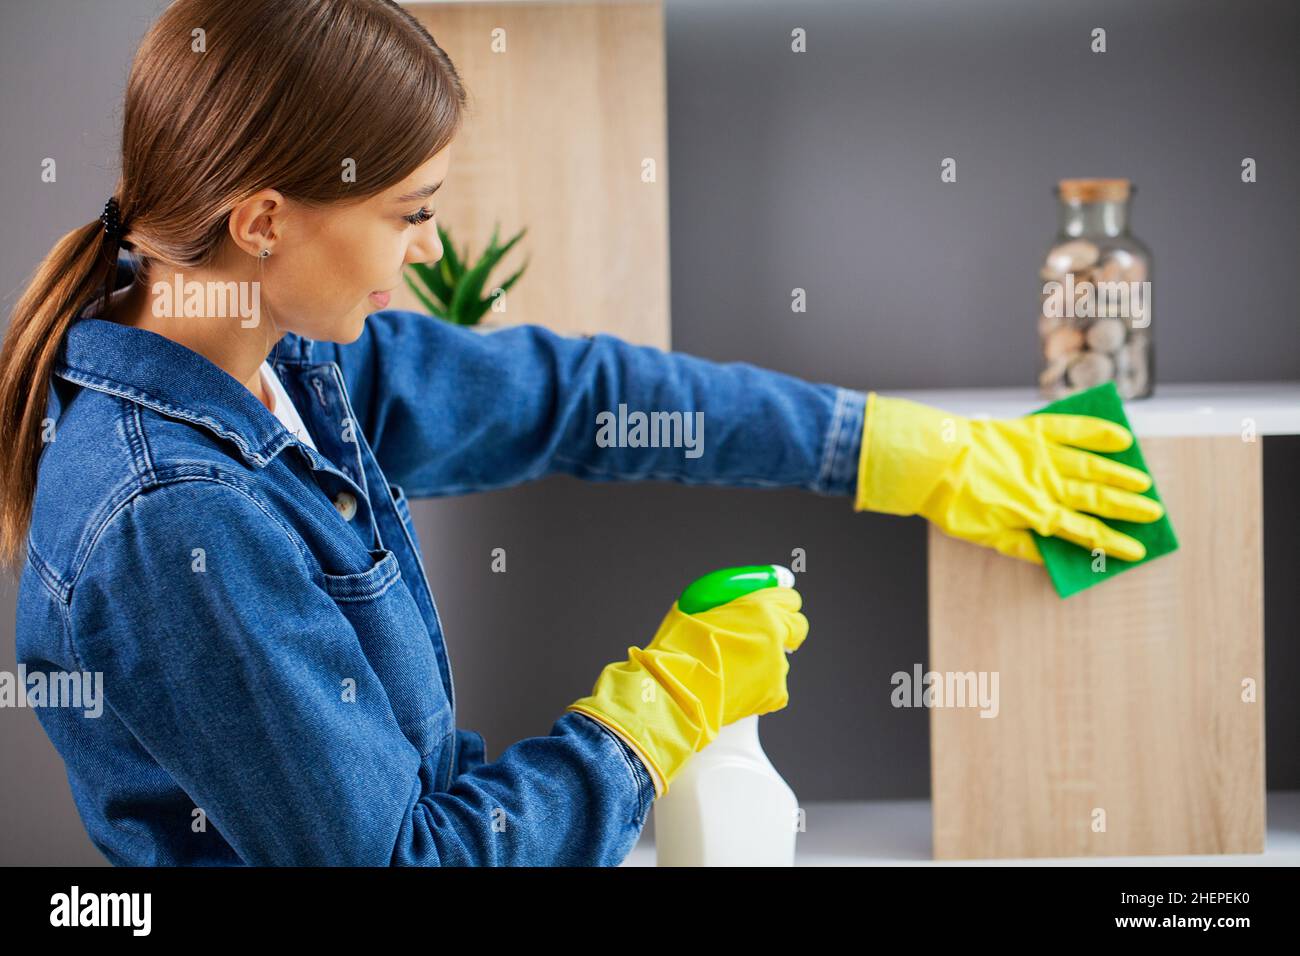 https://c8.alamy.com/comp/2HEPEK0/pretty-woman-in-uniform-with-supplies-cleaning-in-office-2HEPEK0.jpg